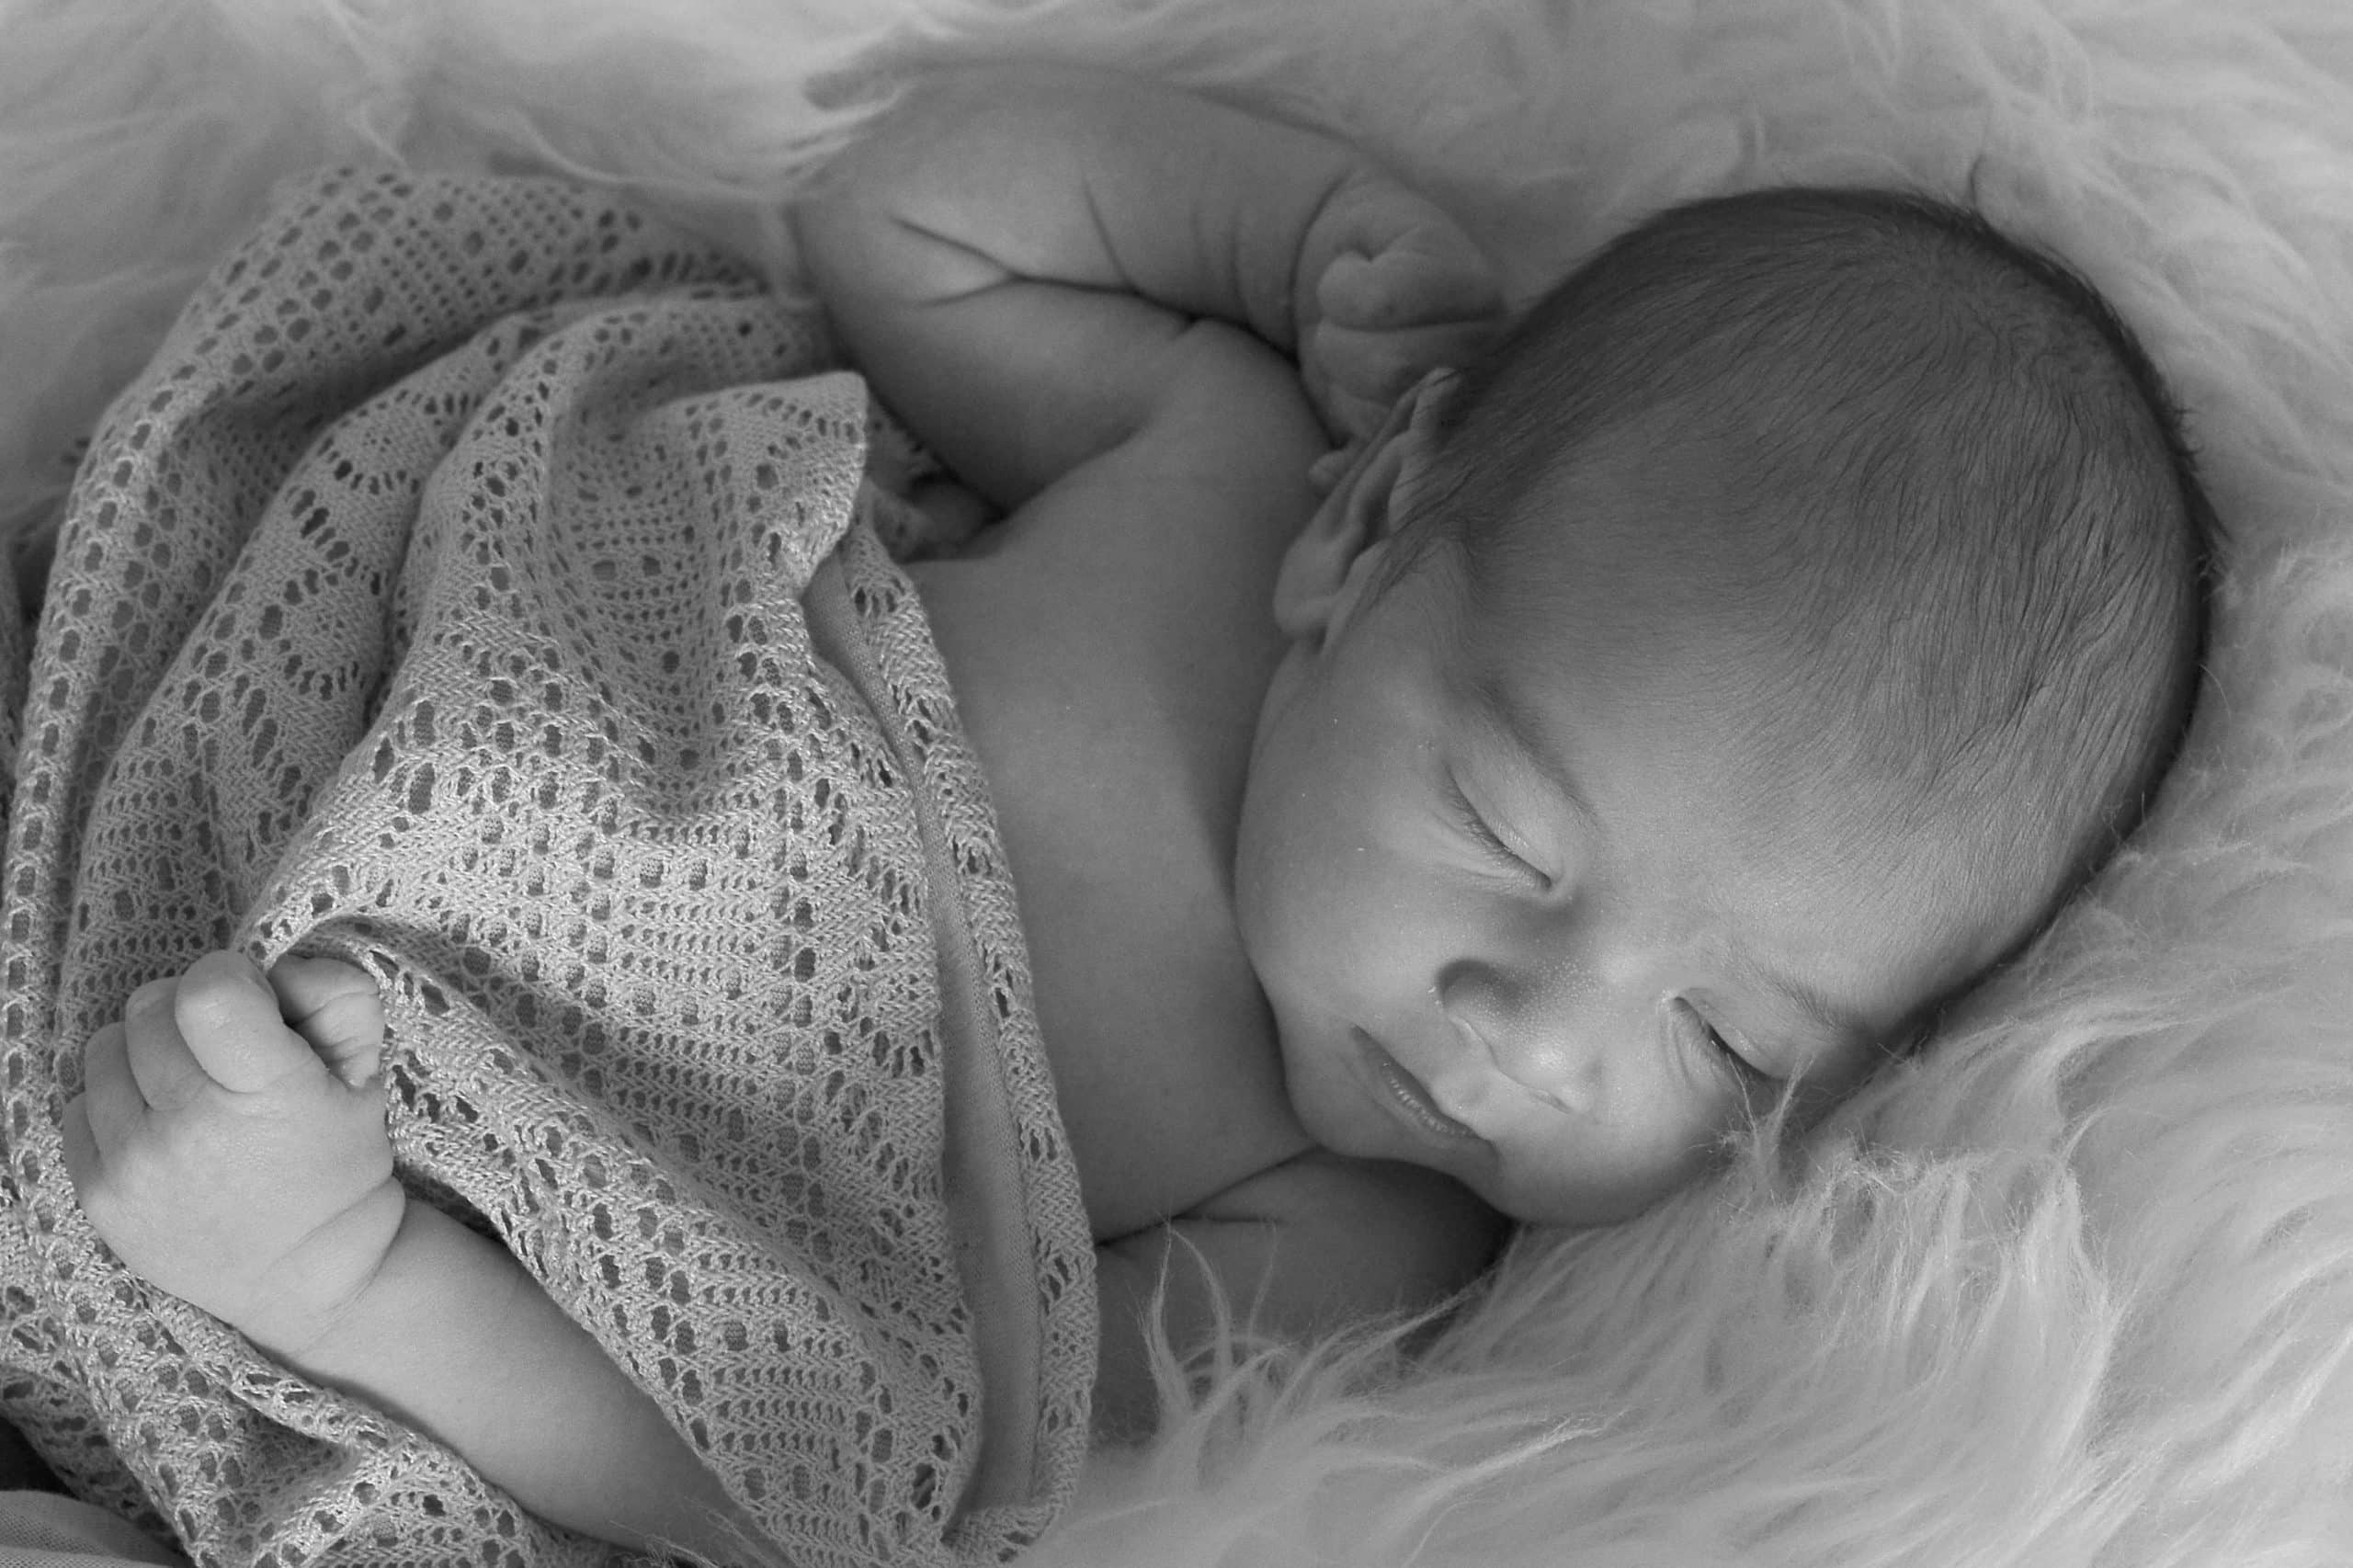 Sleeping infant boy with swaddle blanket